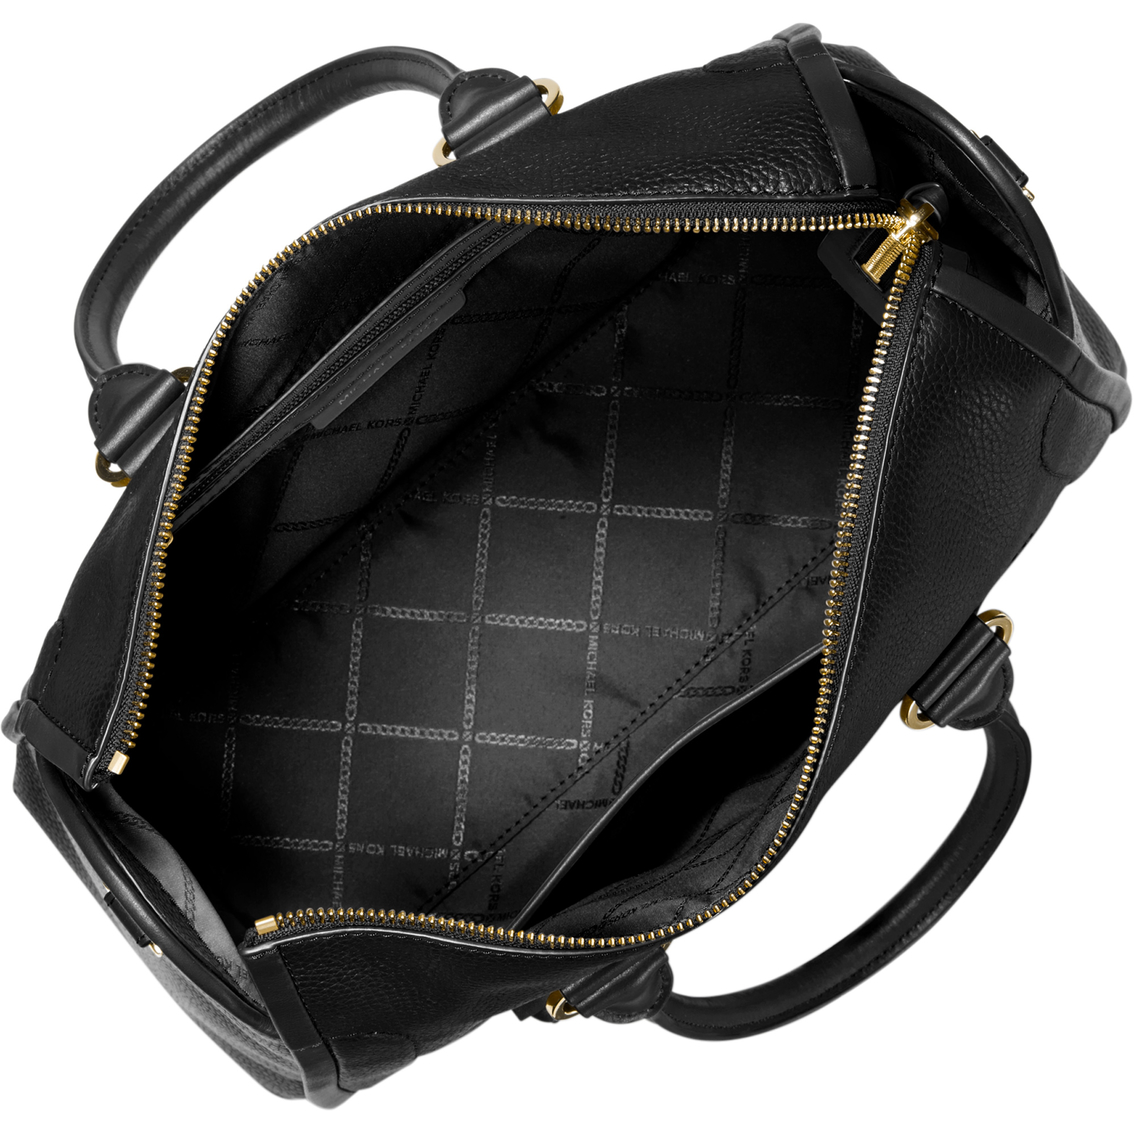 Michael Kors Carine Medium Pebbled Leather Satchel Bag in Navy